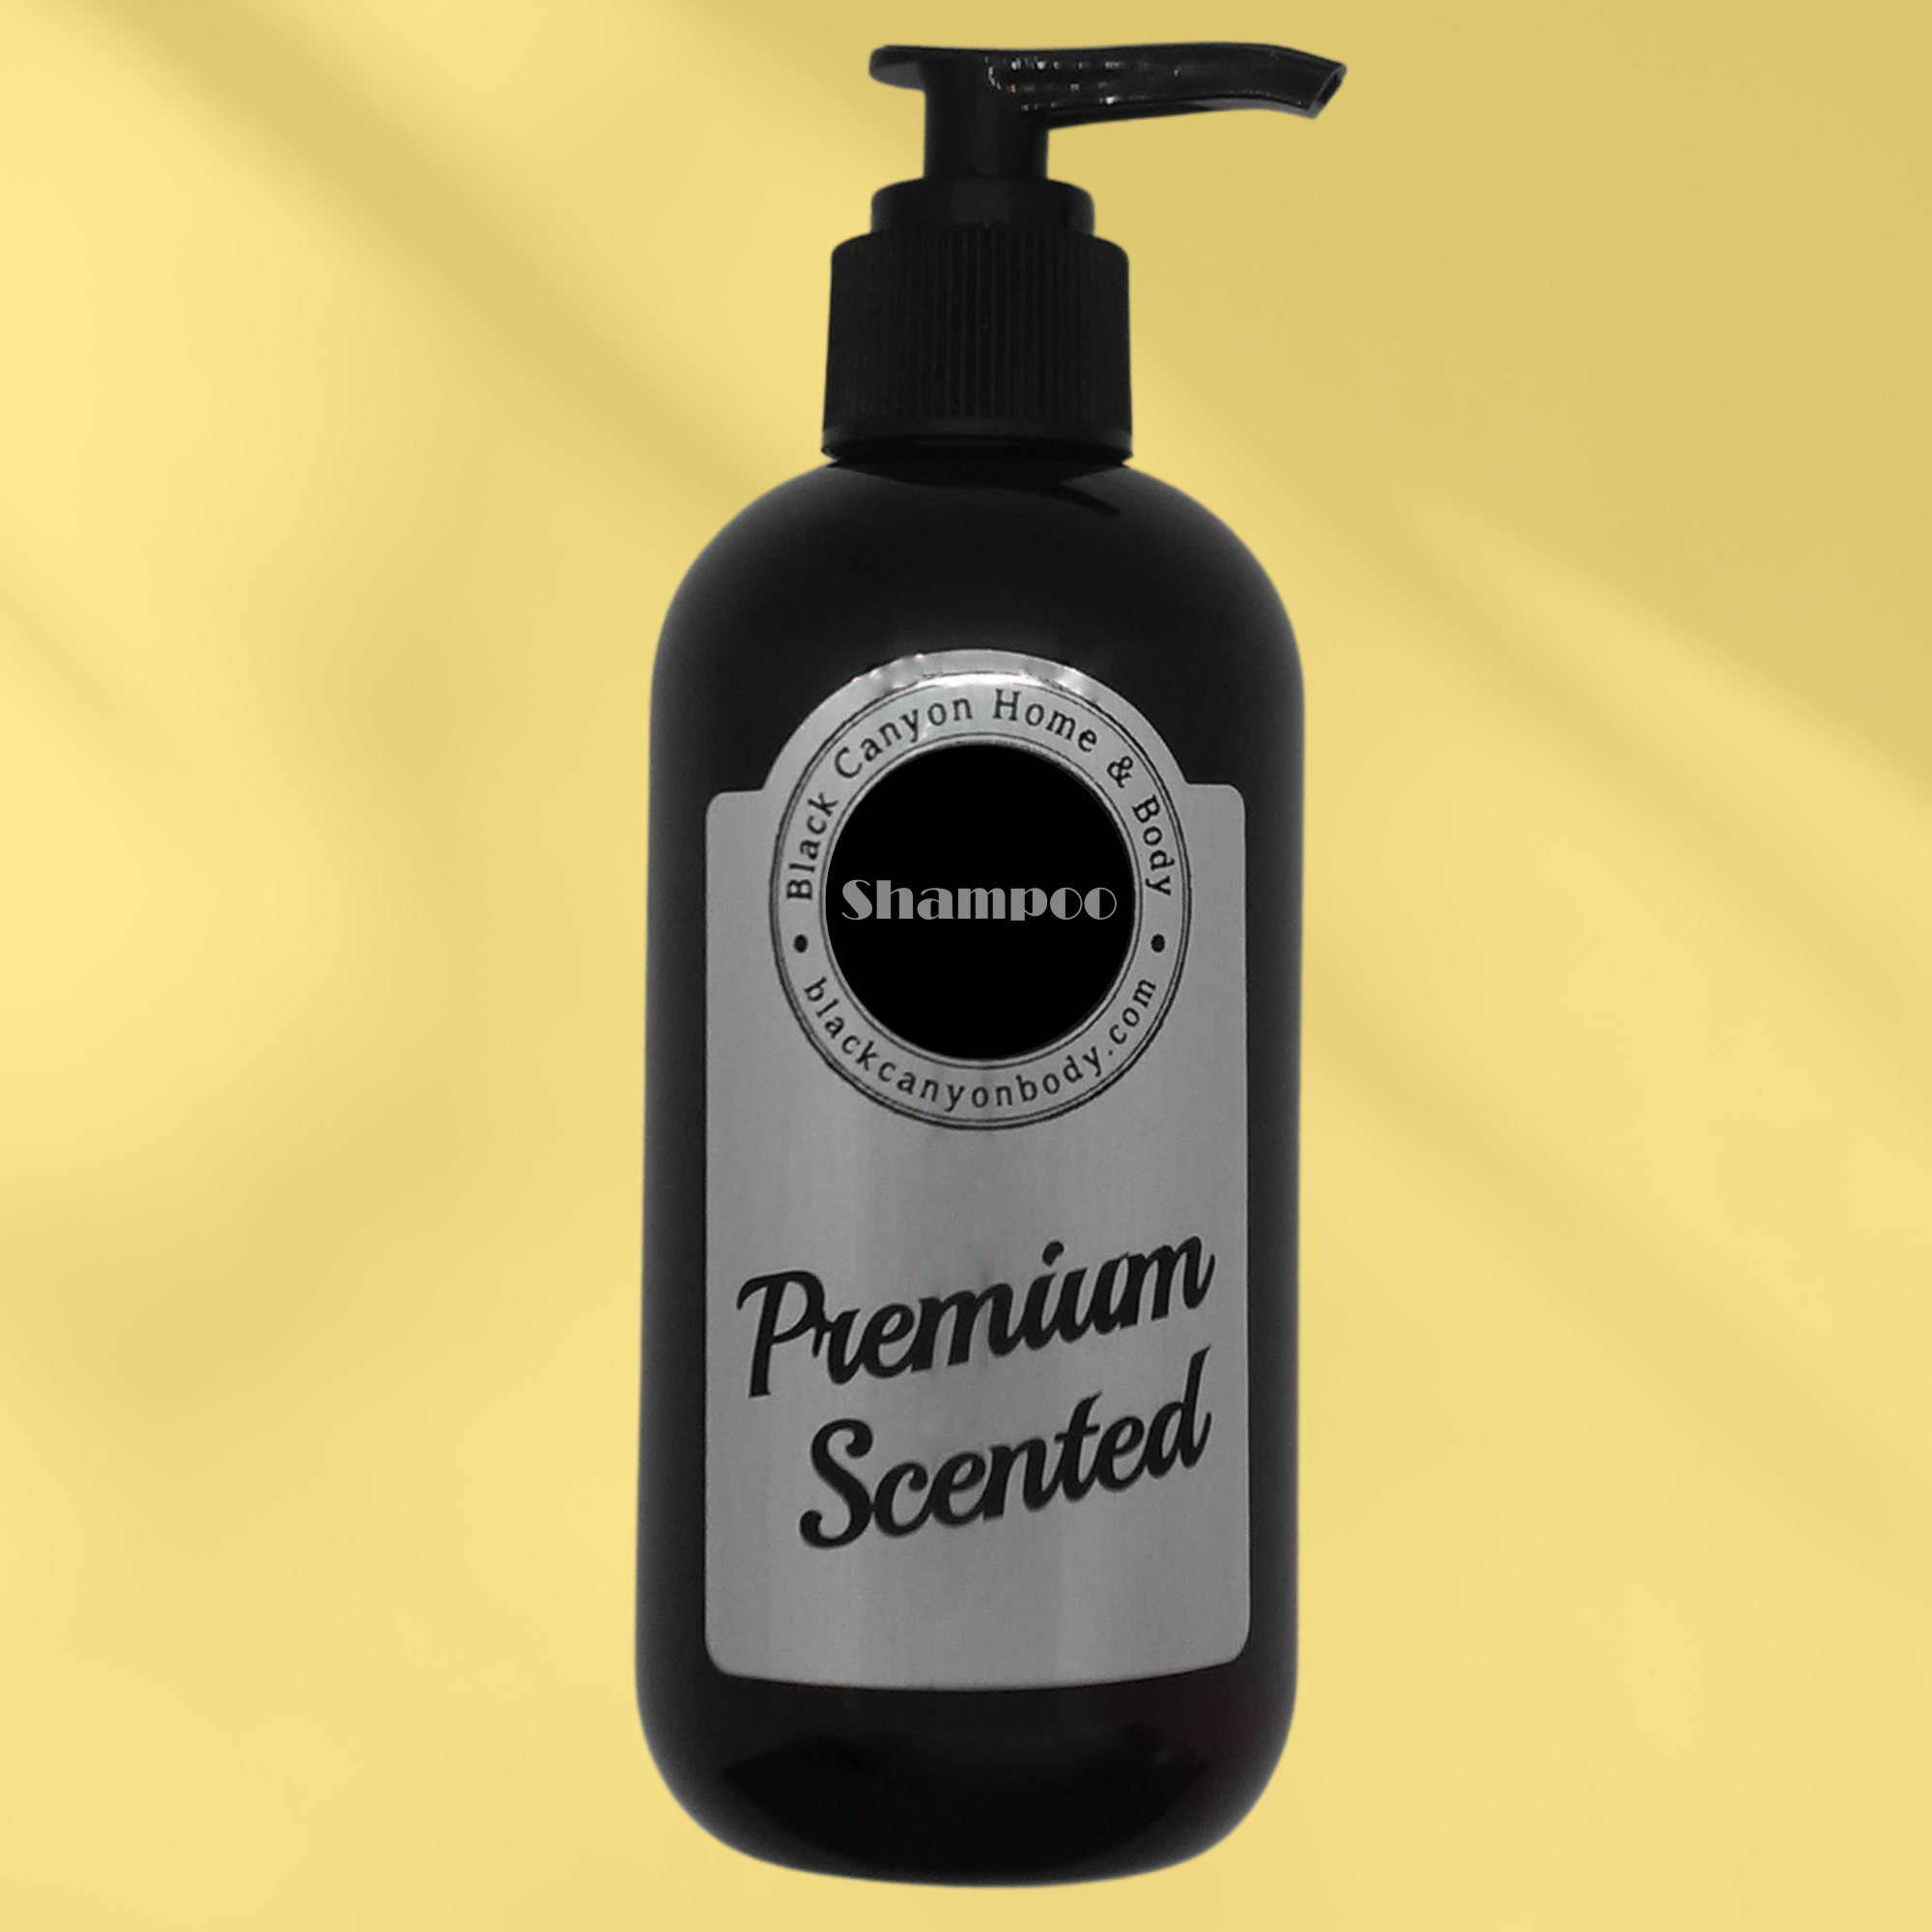 Black Canyon Autumn Spiced Fir Scented Shampoo with Argan Oil